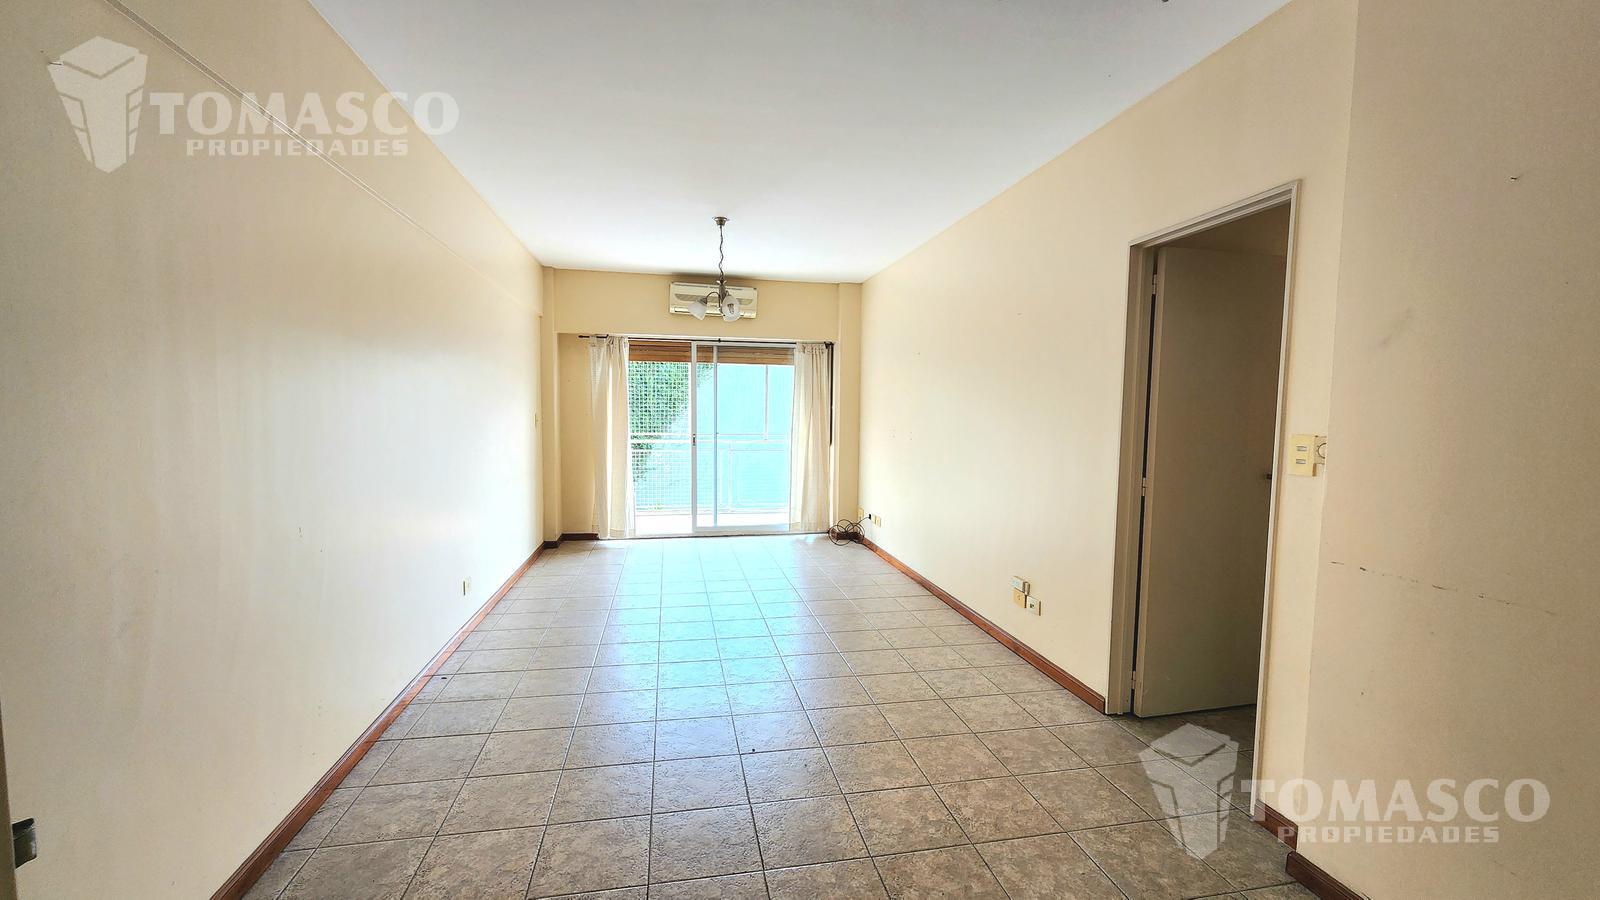 #5126248 | Rental | Apartment | Villa Urquiza (Tomasco )